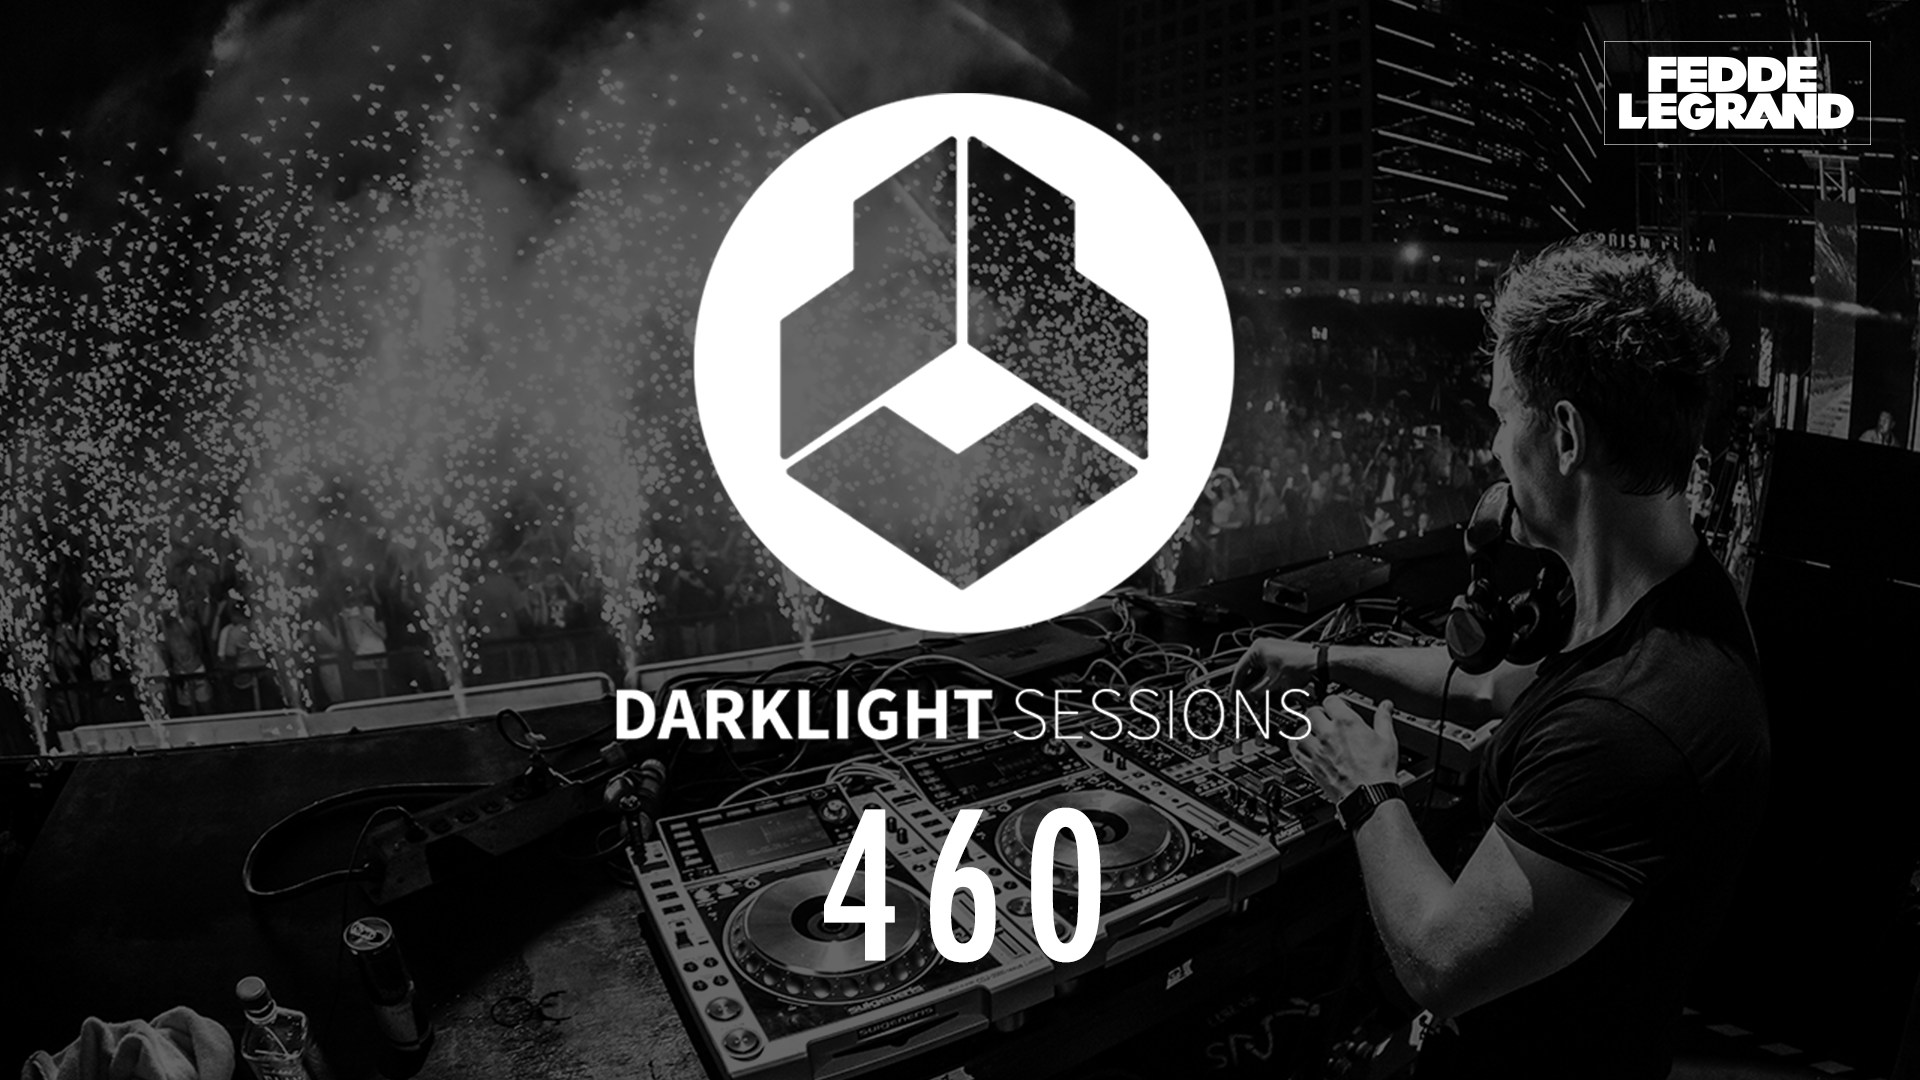 Darklight Sessions 460